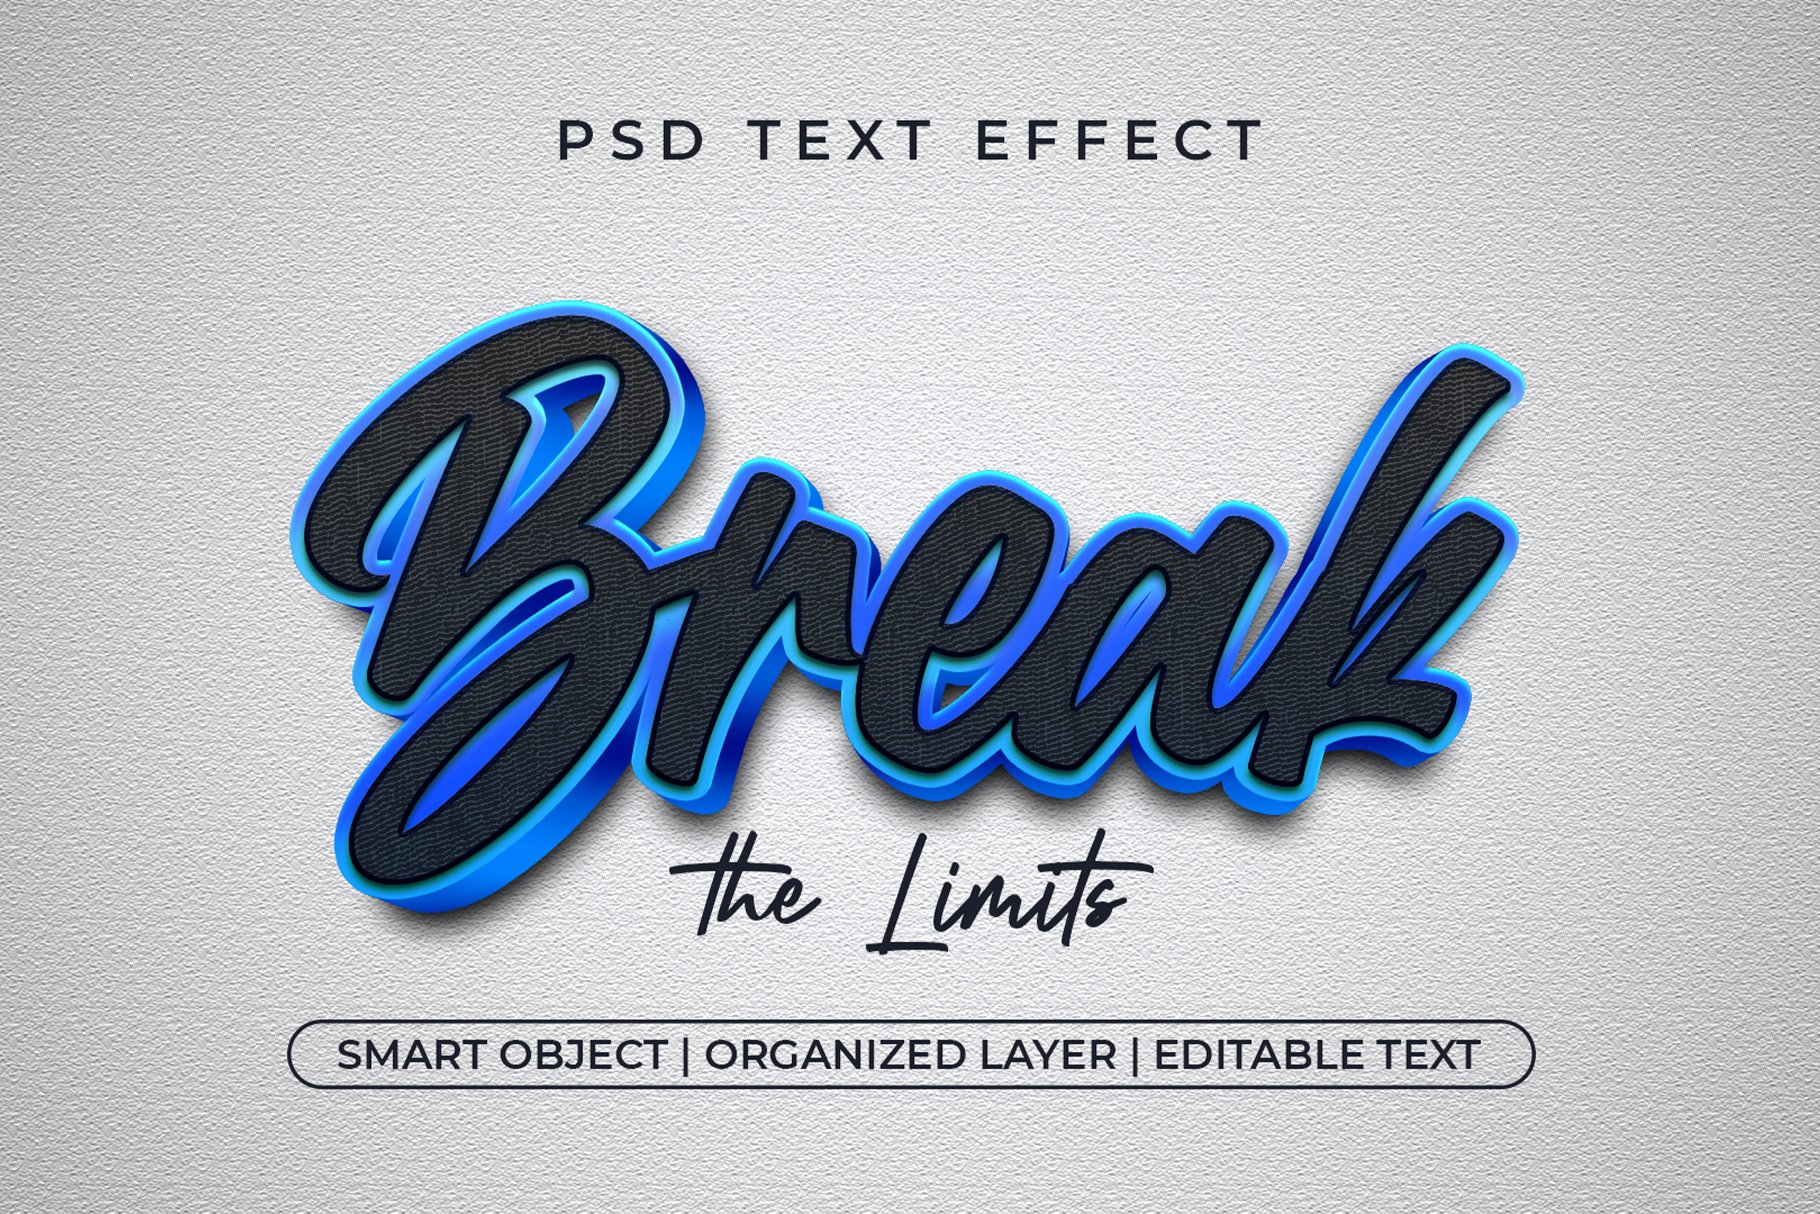 Break Text Effectcover image.